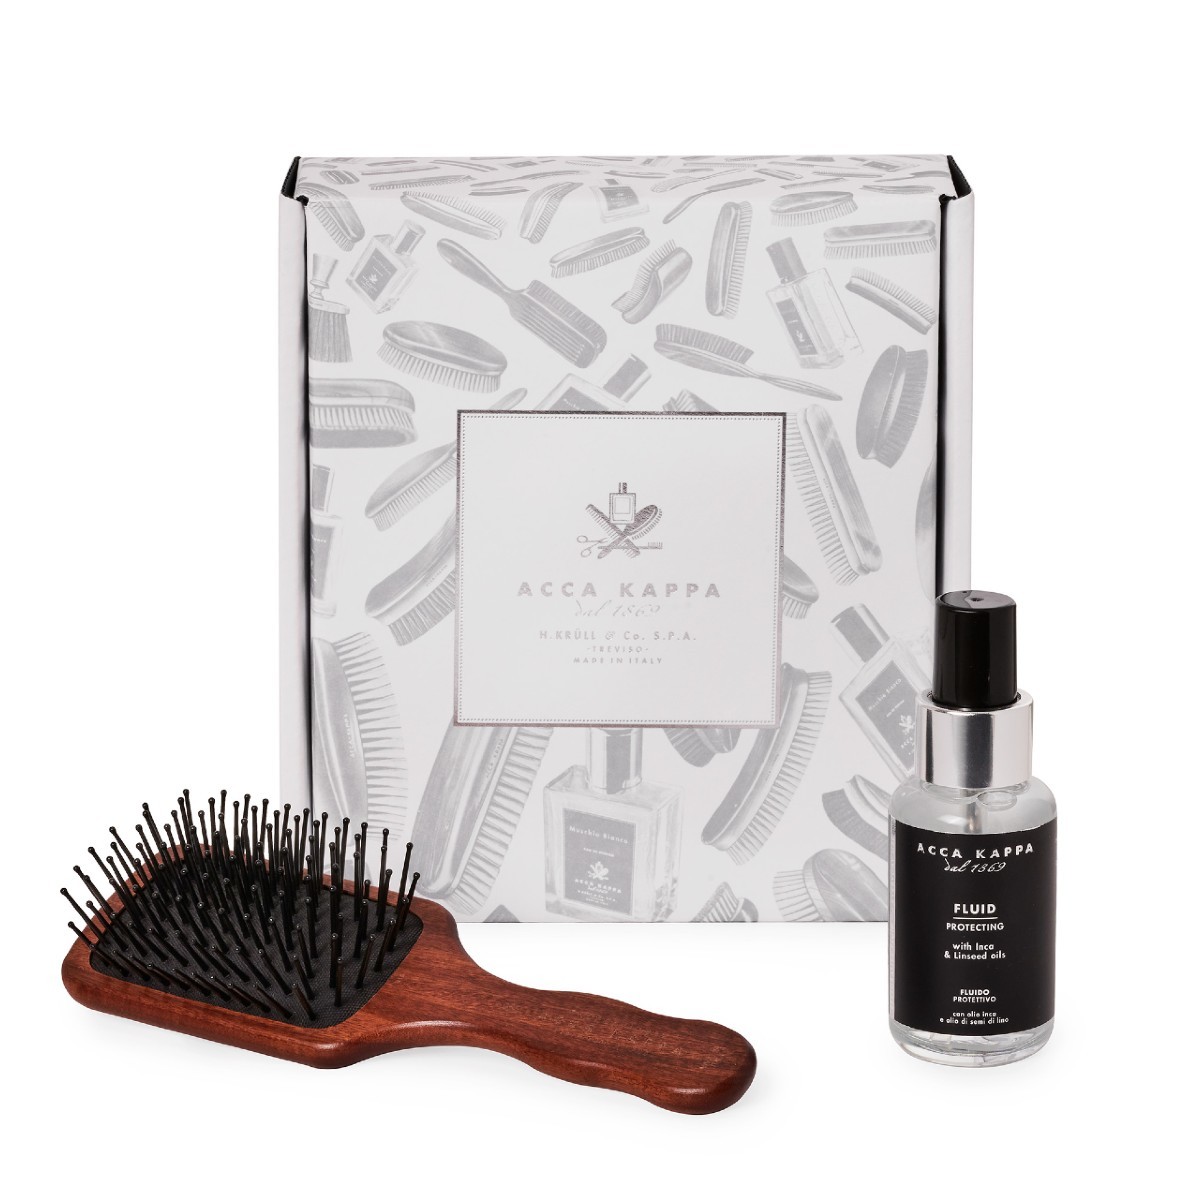 ACCA KAPPA White Moss Gift Set, Travel Size Hair Brush, Hair Fluid